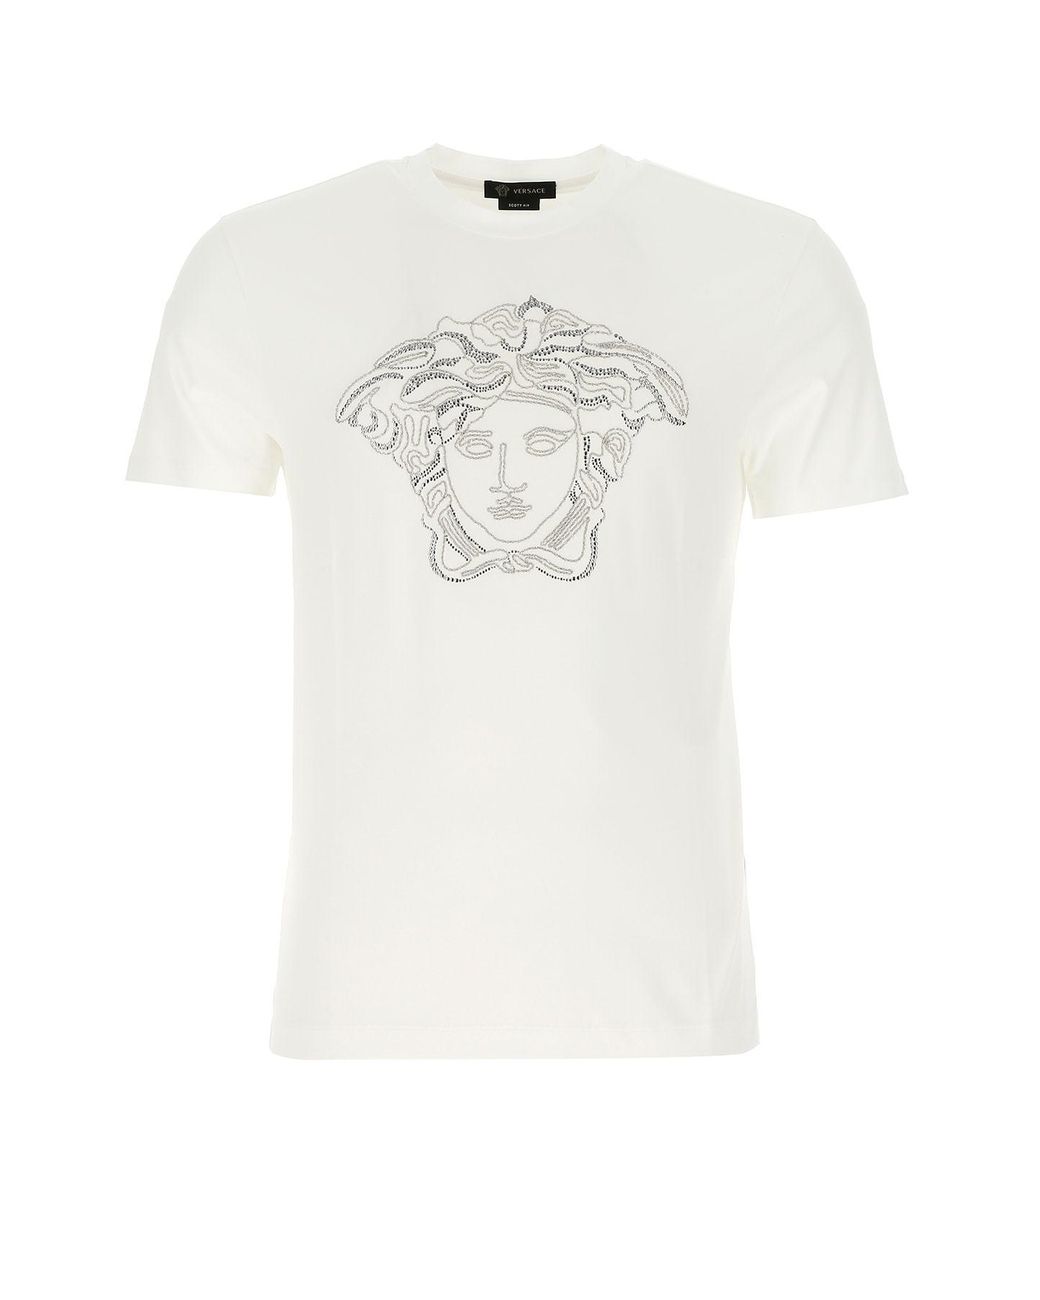 Versace Cotton Embellished Medusa T-shirt in White for Men - Lyst